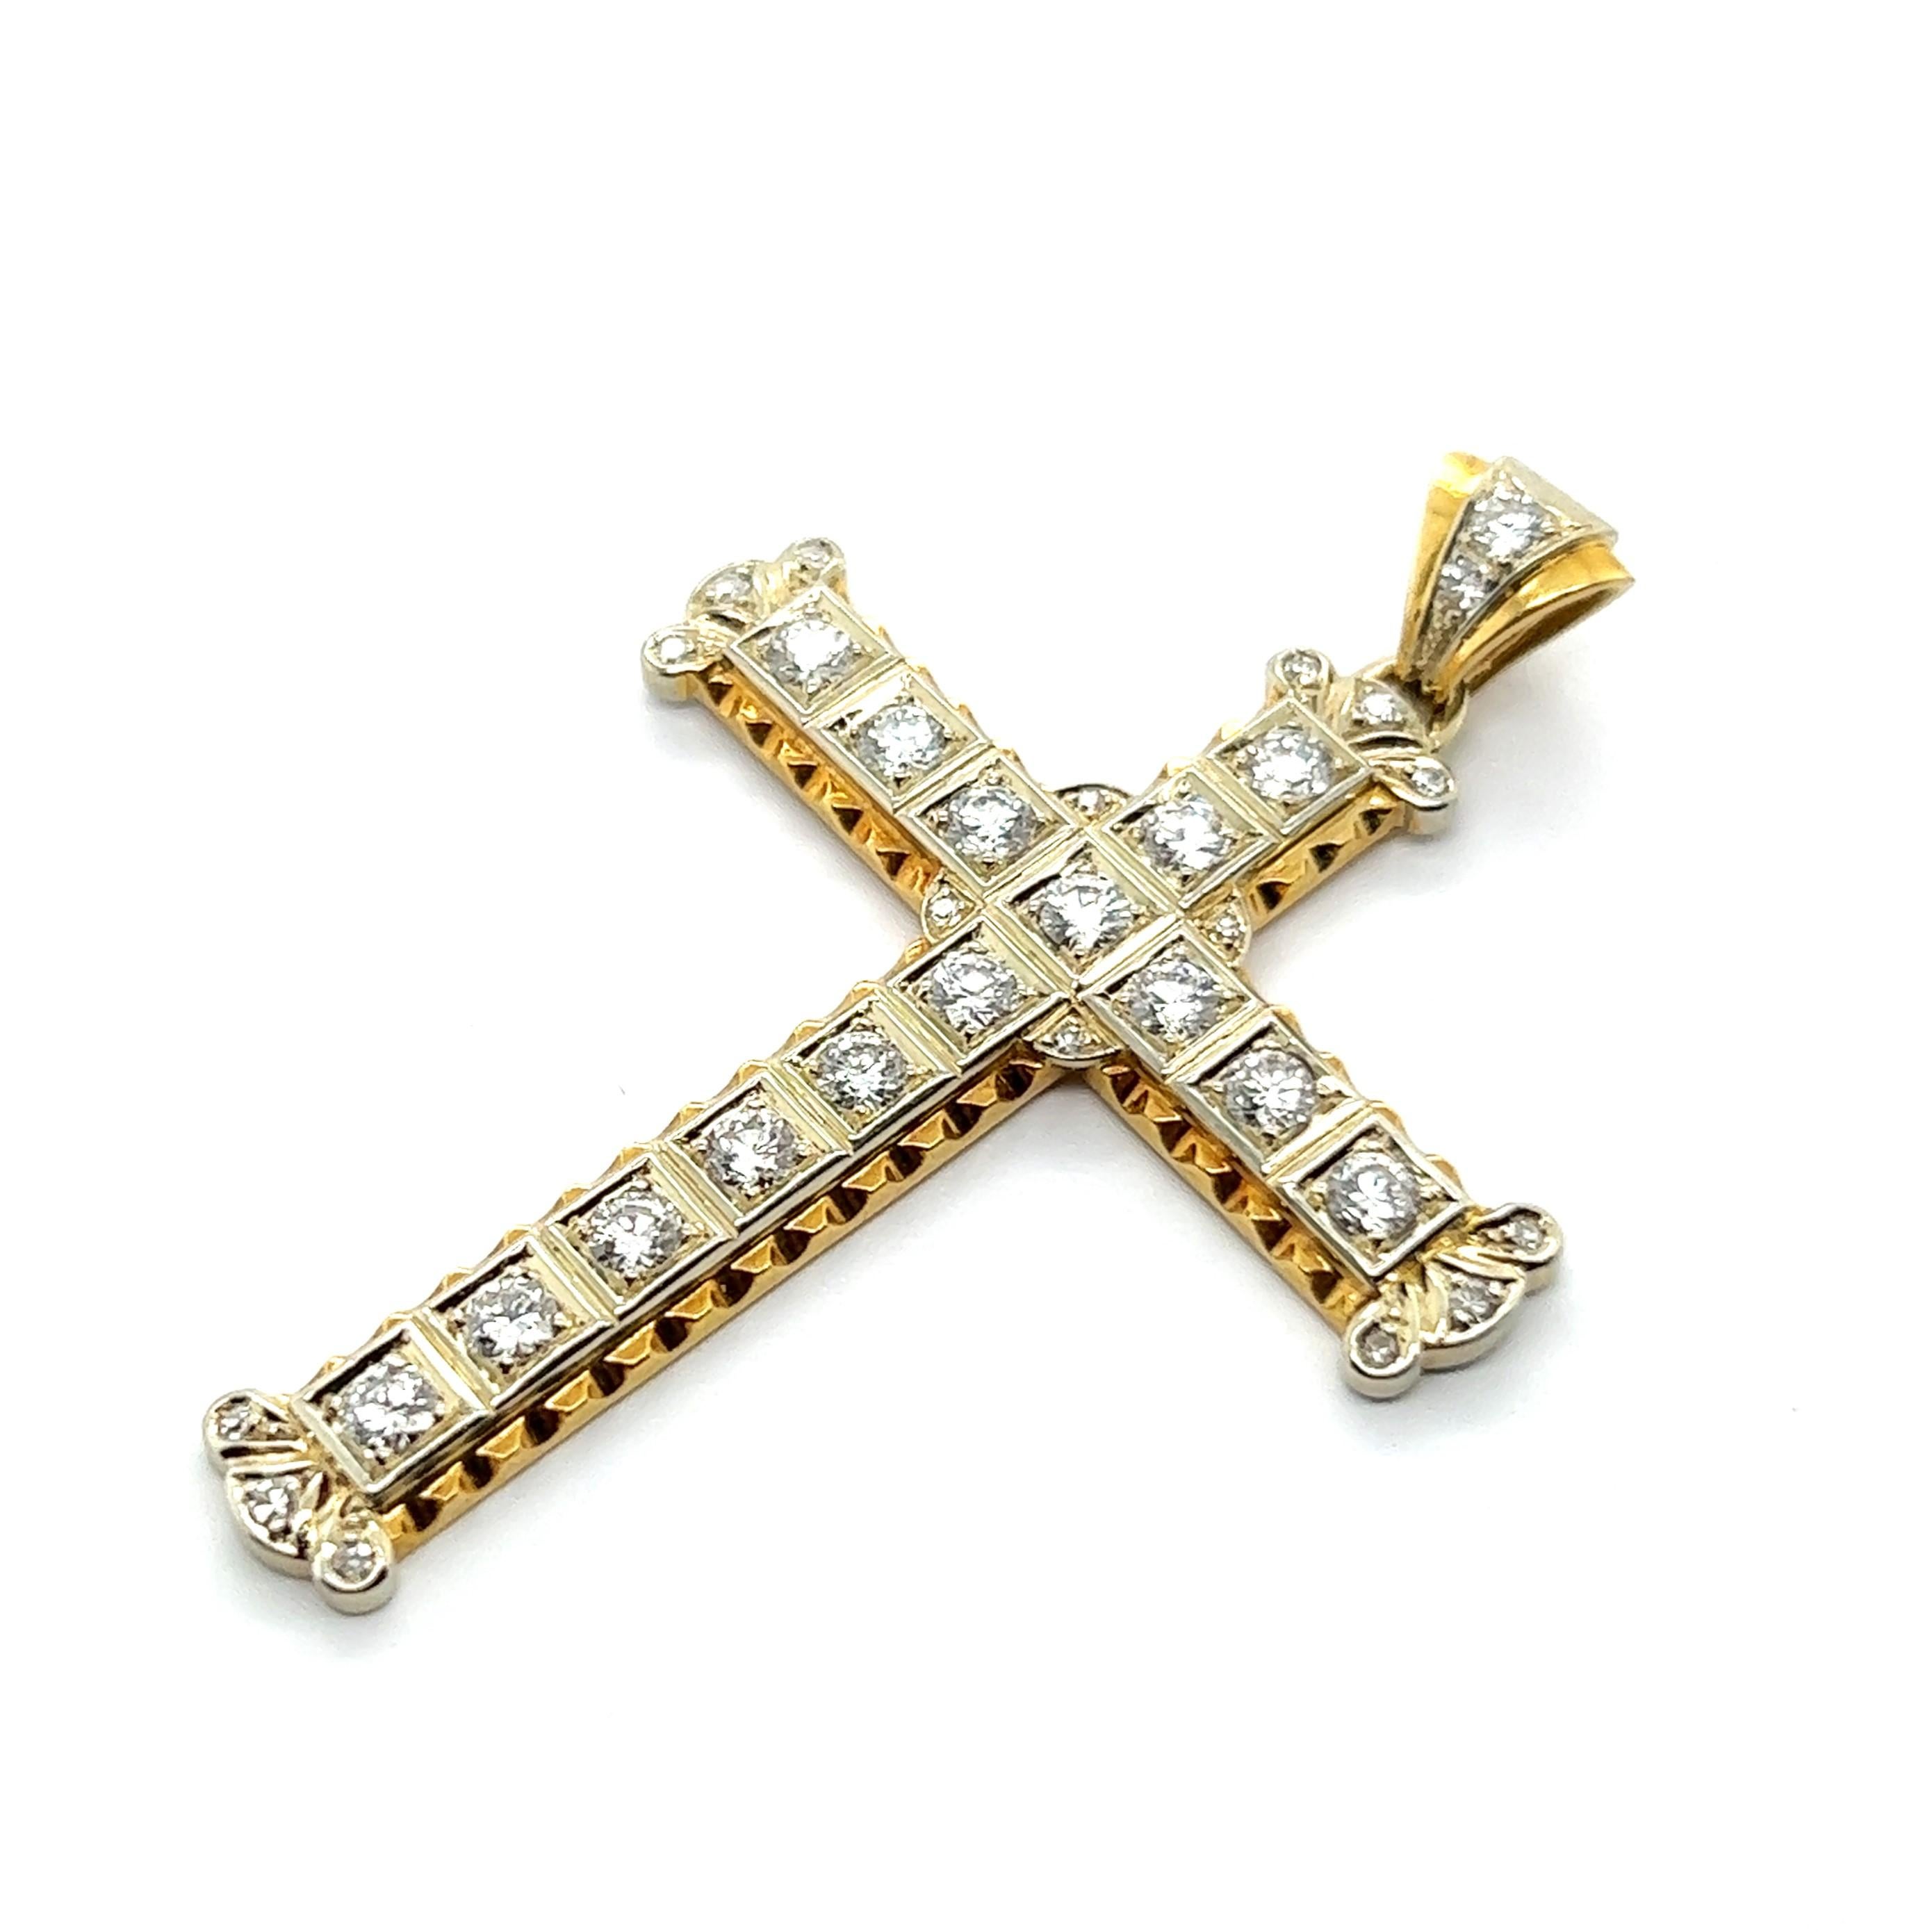 Artist Cross Pendant with Diamonds in 18 Karat Yellow & White Gold